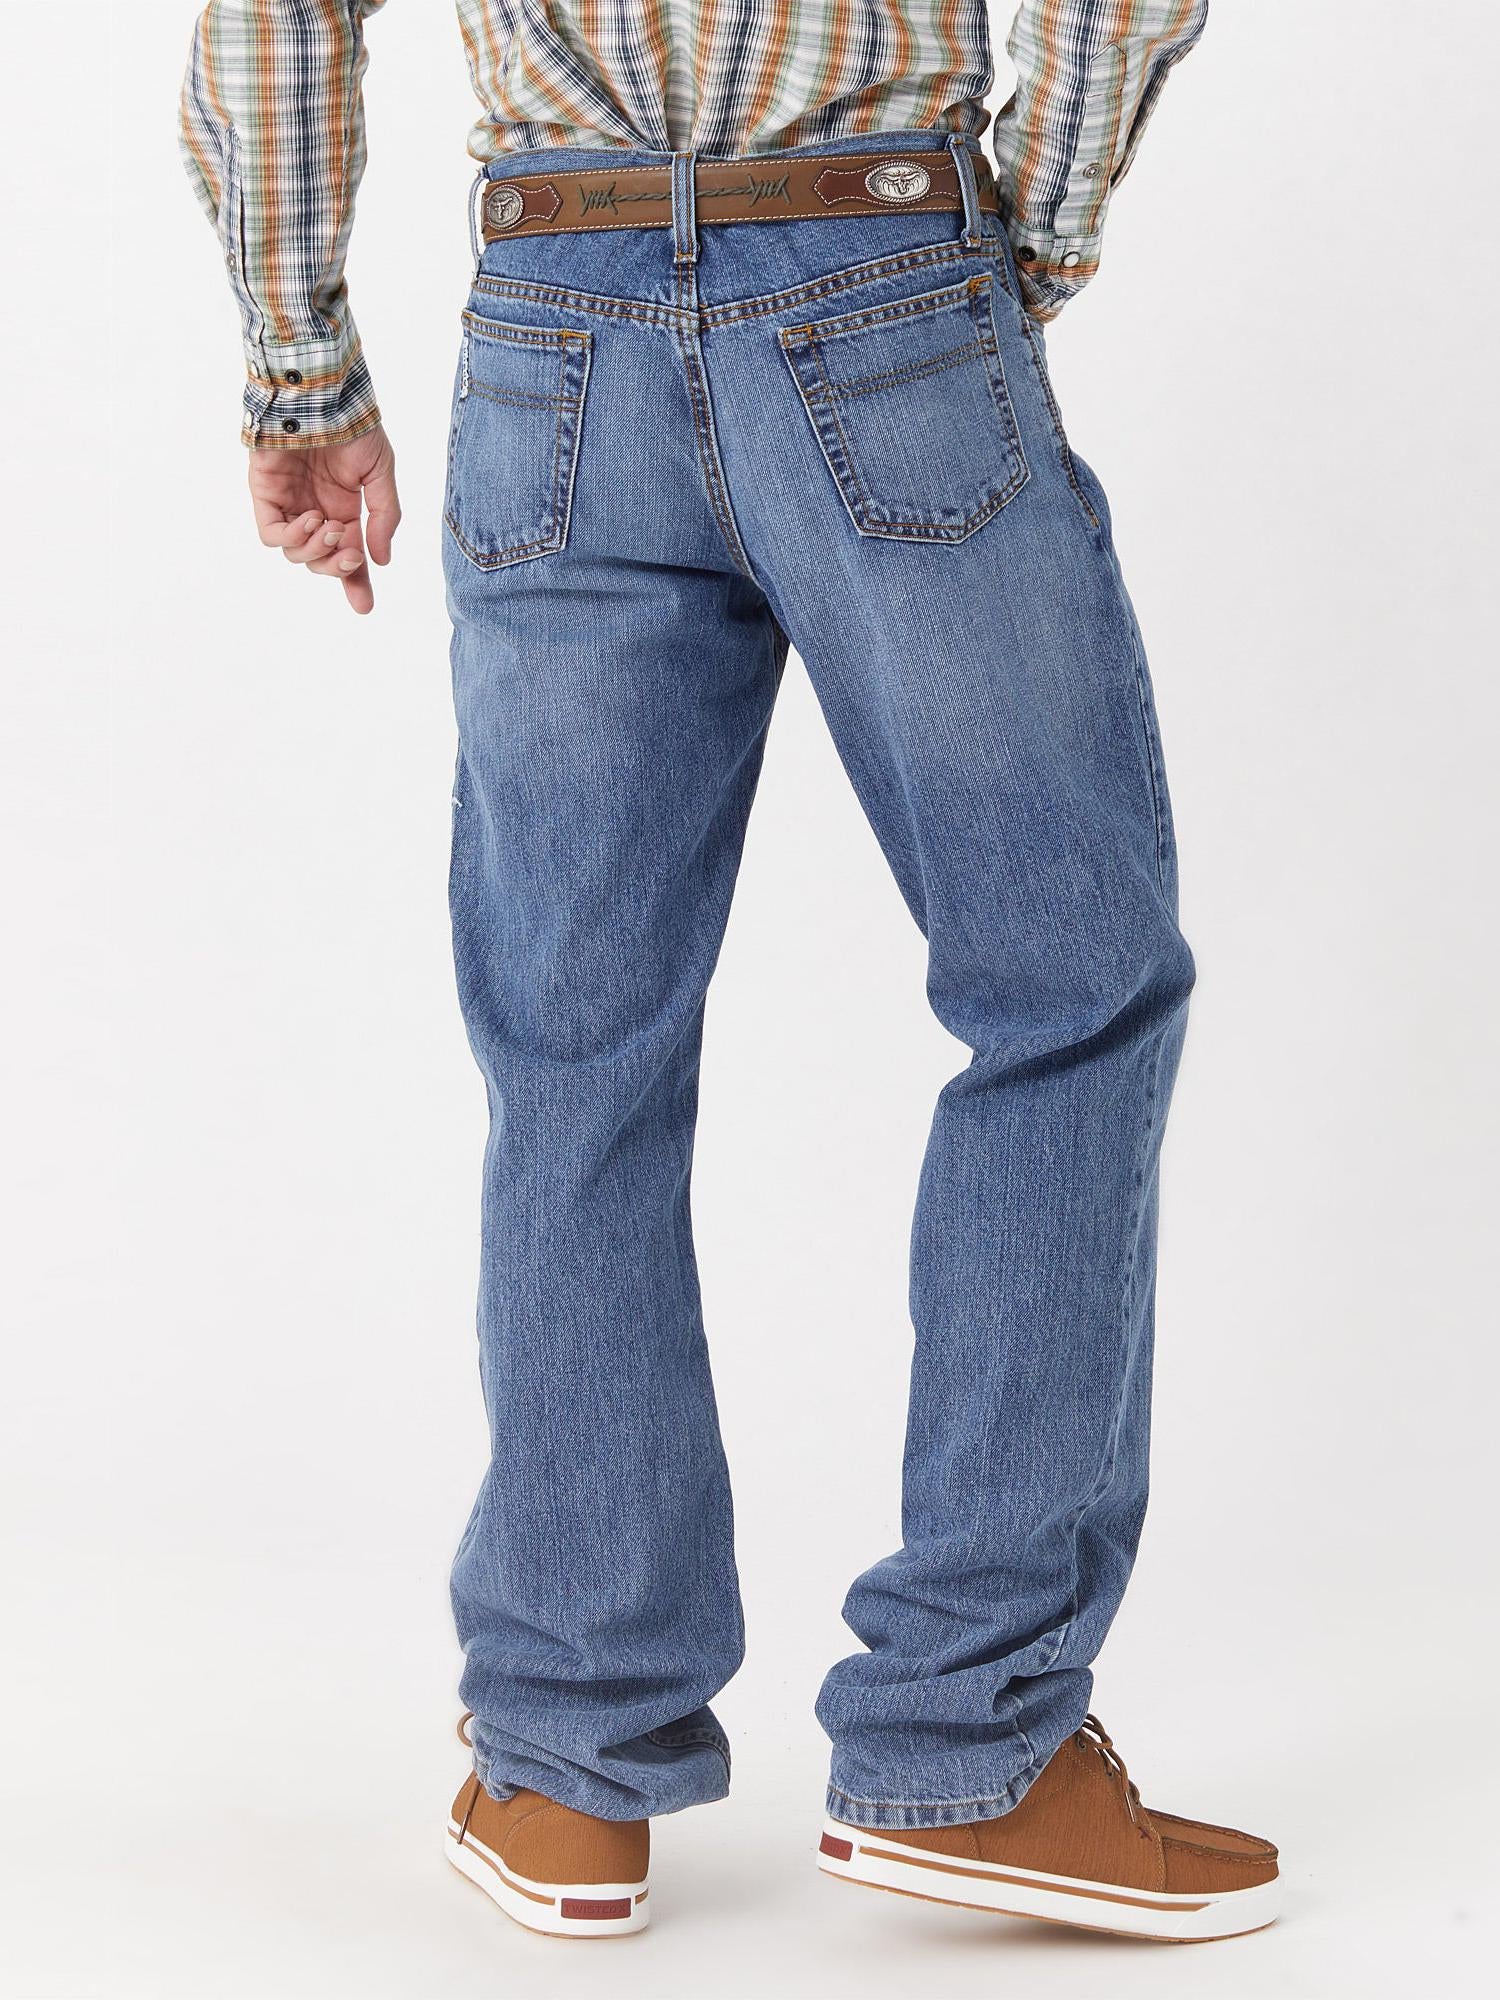 Cinch Men's White Label Medium Wash Jeans - Riding Warehouse